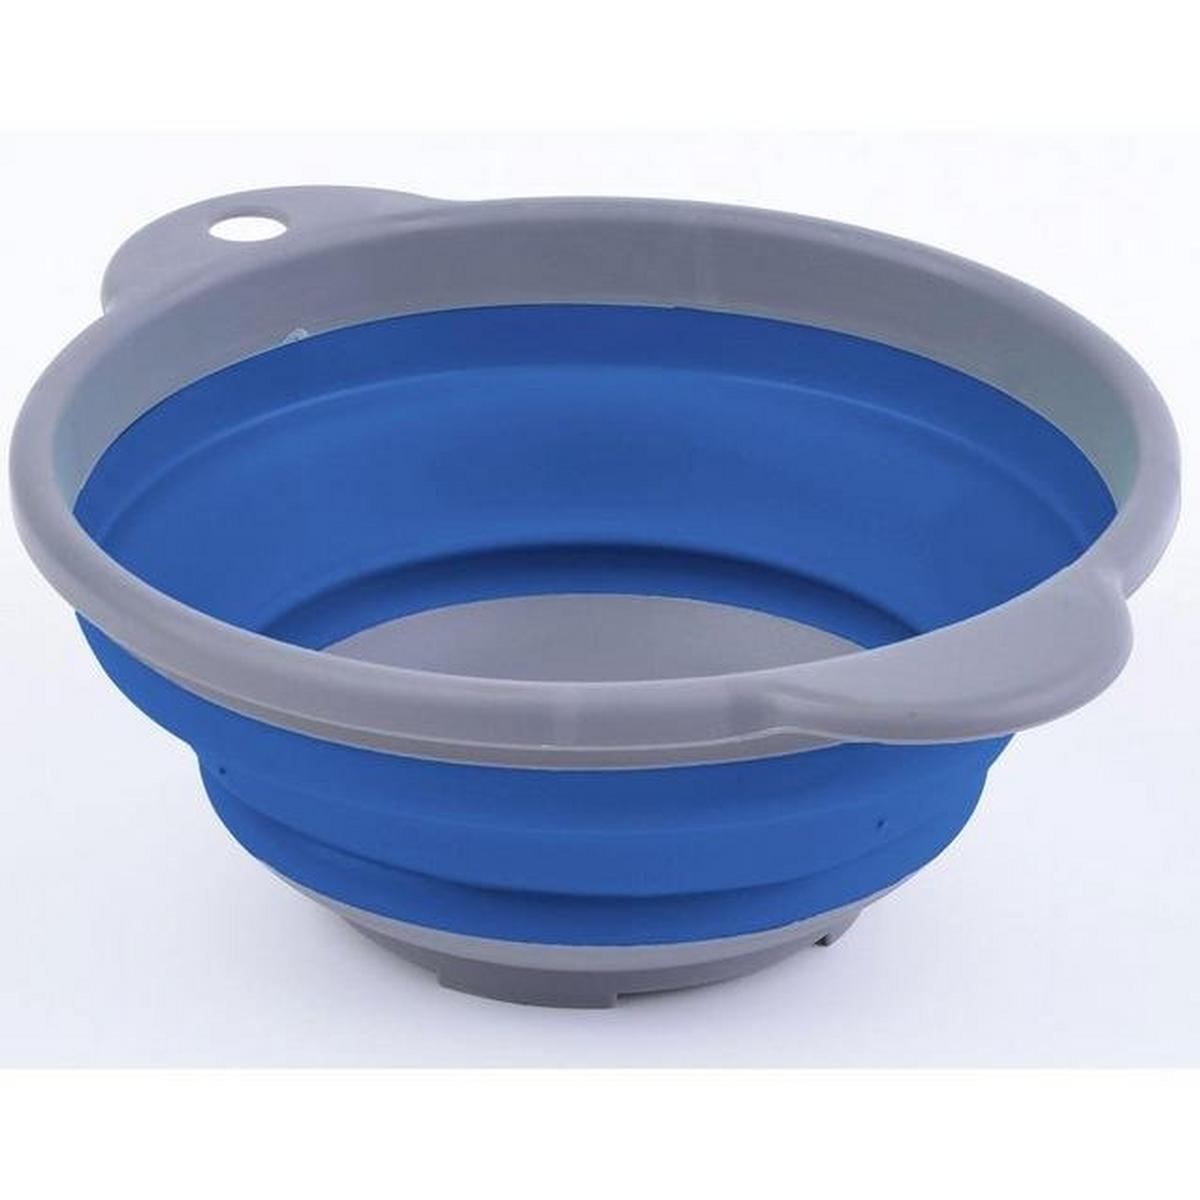 Hi-gear Folding Compact Bowl - Blue